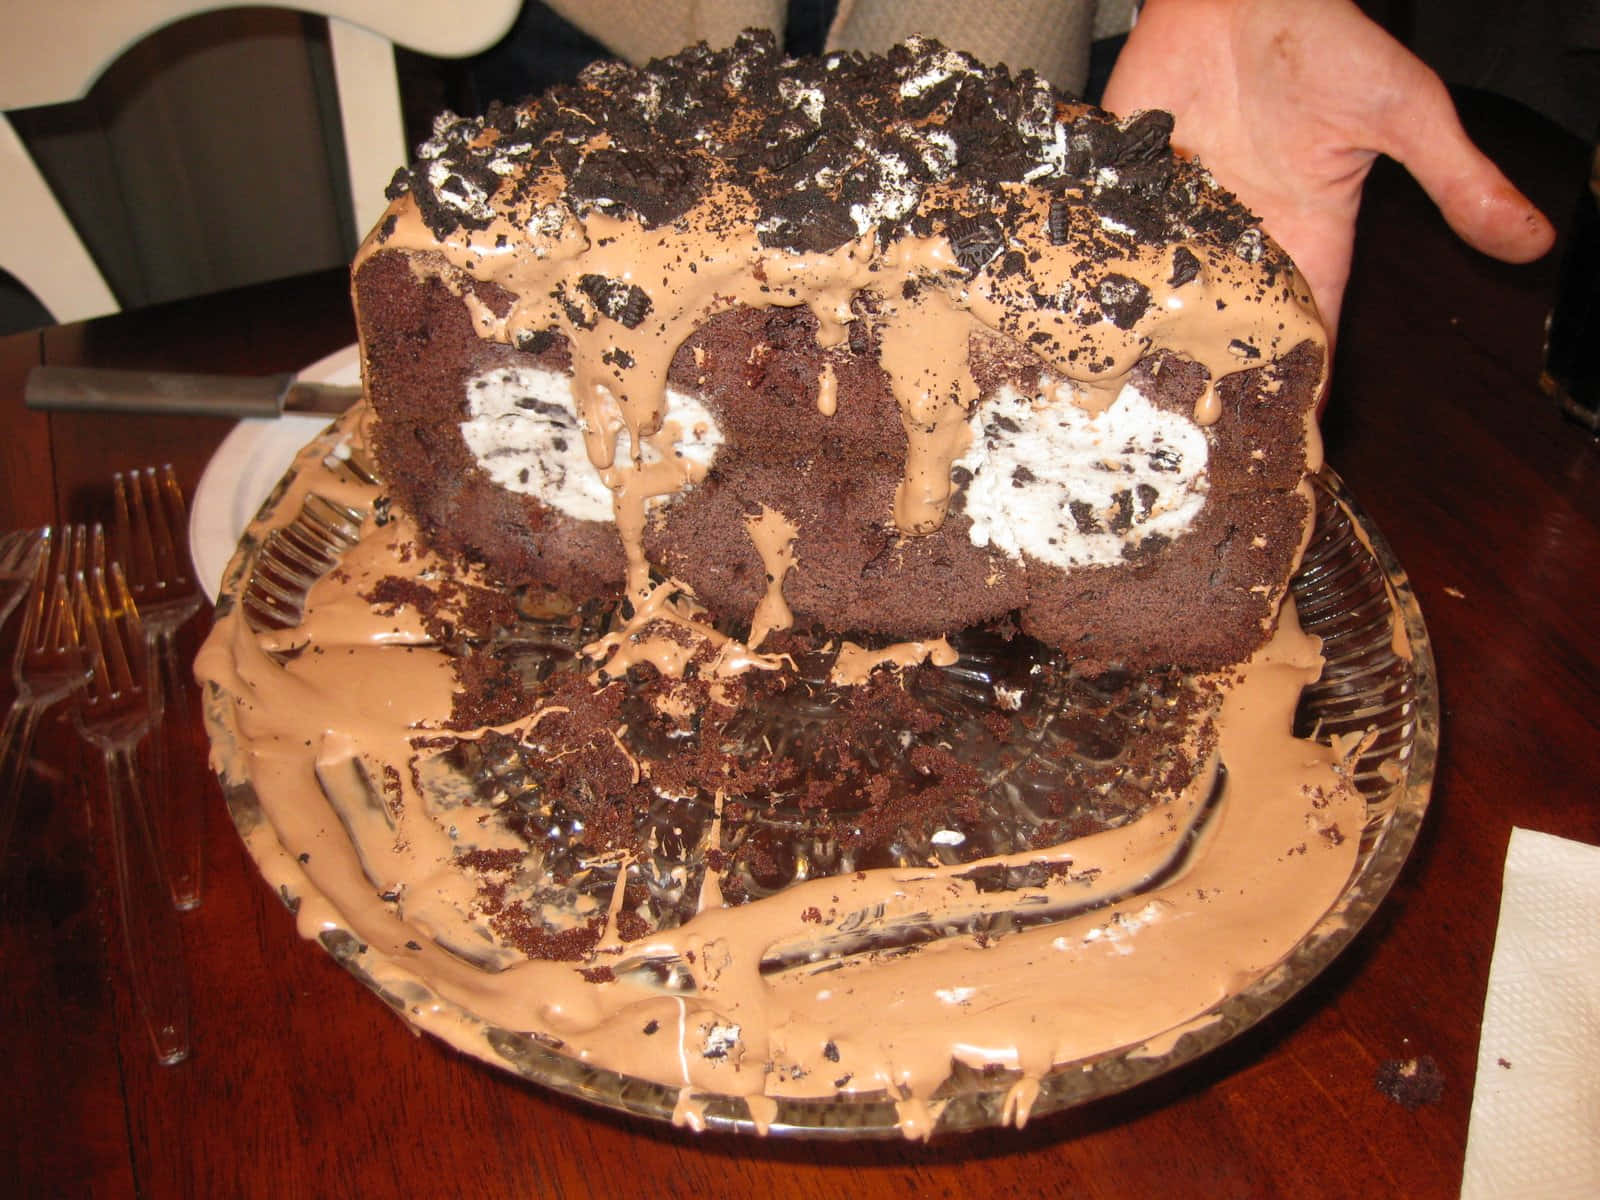 Ugly Cake: It doesn't look very appetizing, but it's still a sweet treat!